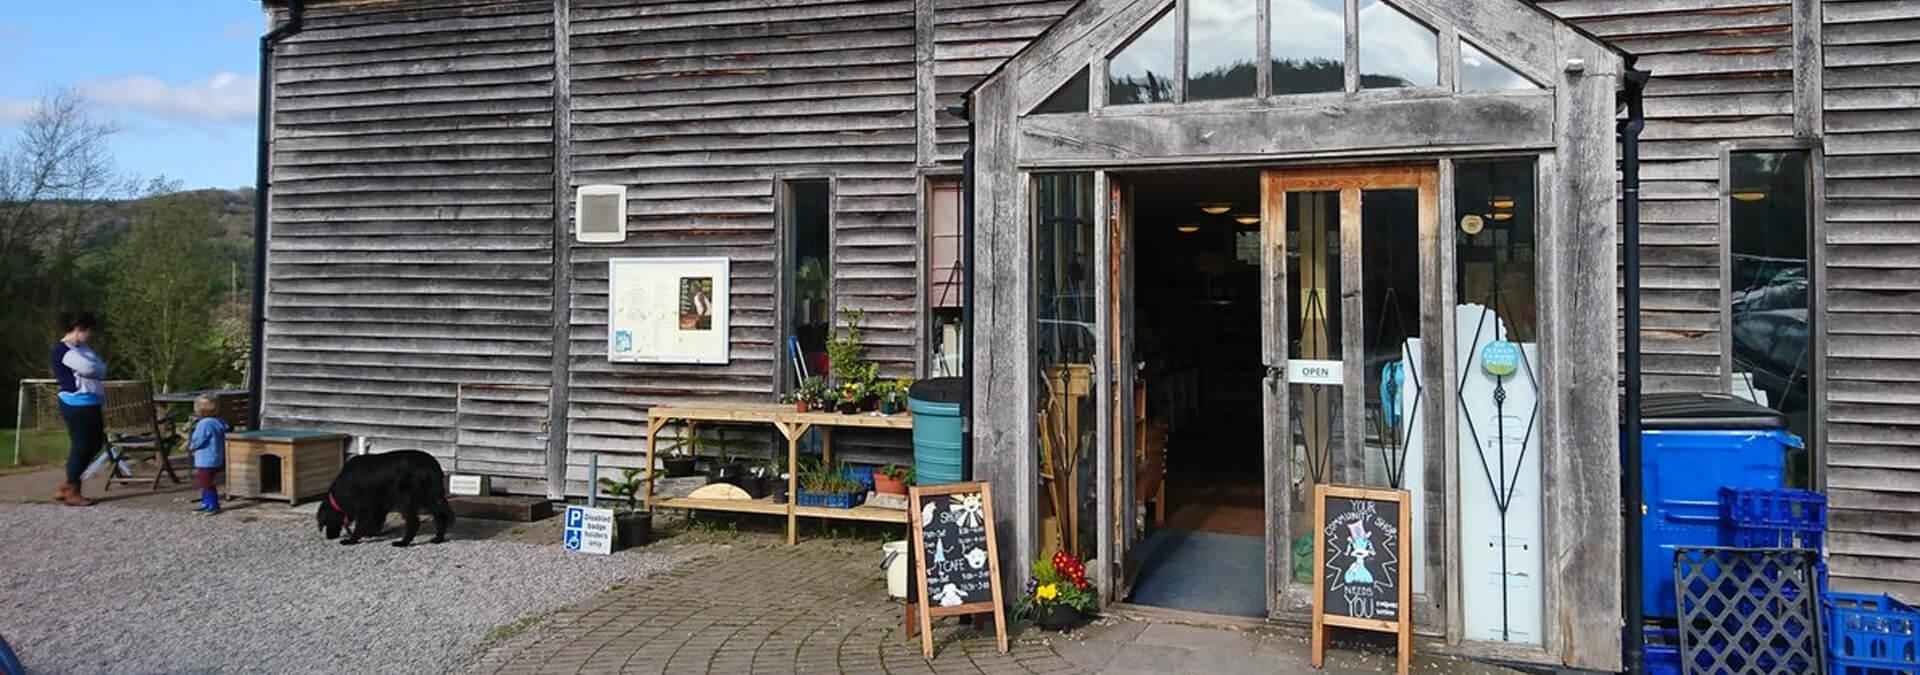 Brockweir and Hewelsfield Village Shop and Cafe